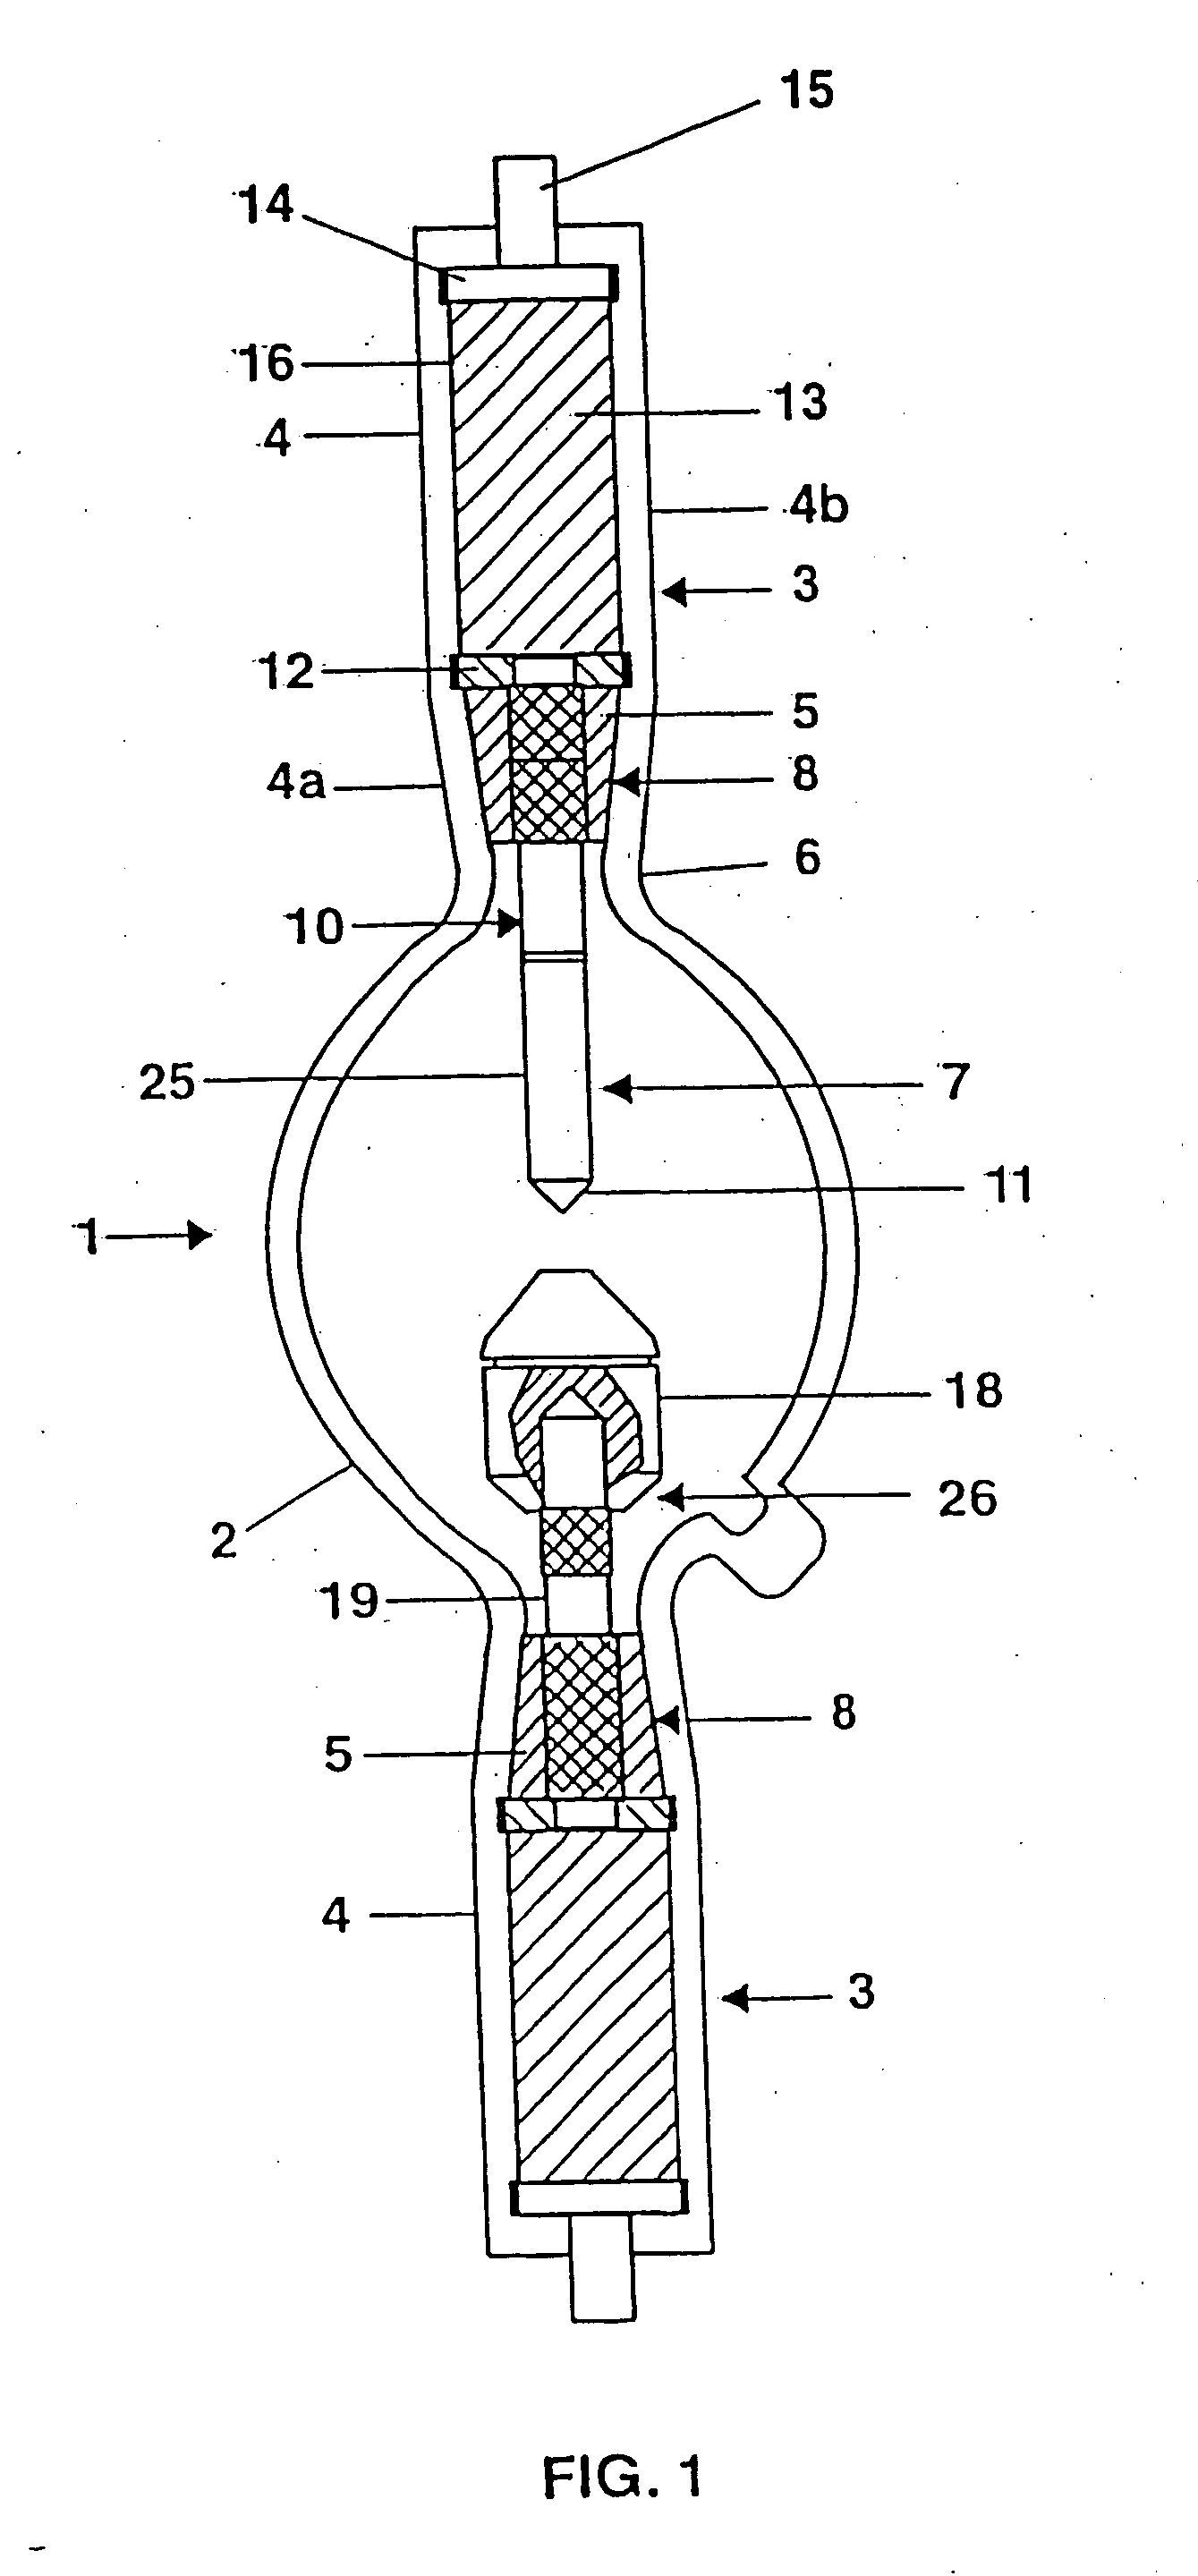 Short arc high-pressure discharge lamp